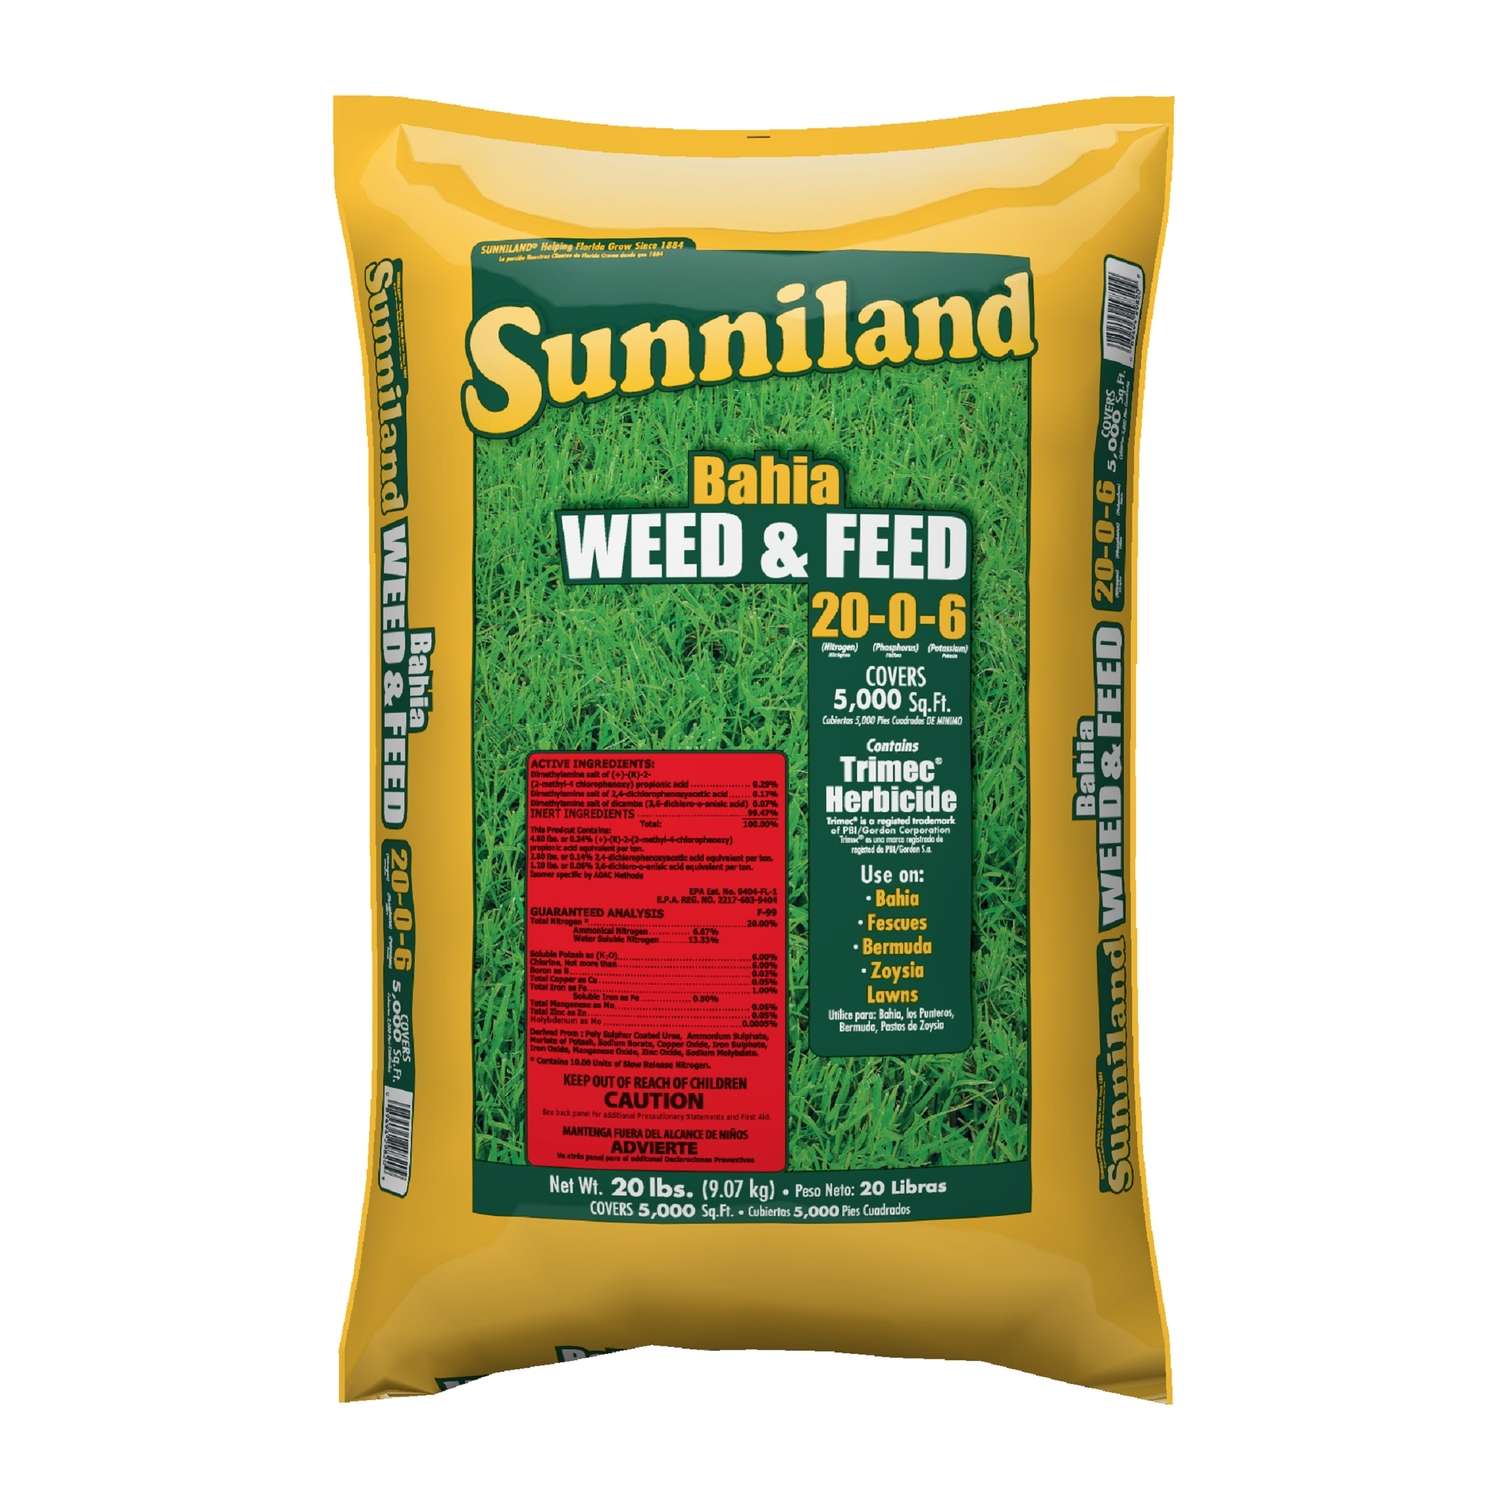 Sunniland 20-0-6 Weed & Feed Lawn Fertilizer For Bahia Grass 5000 sq ft